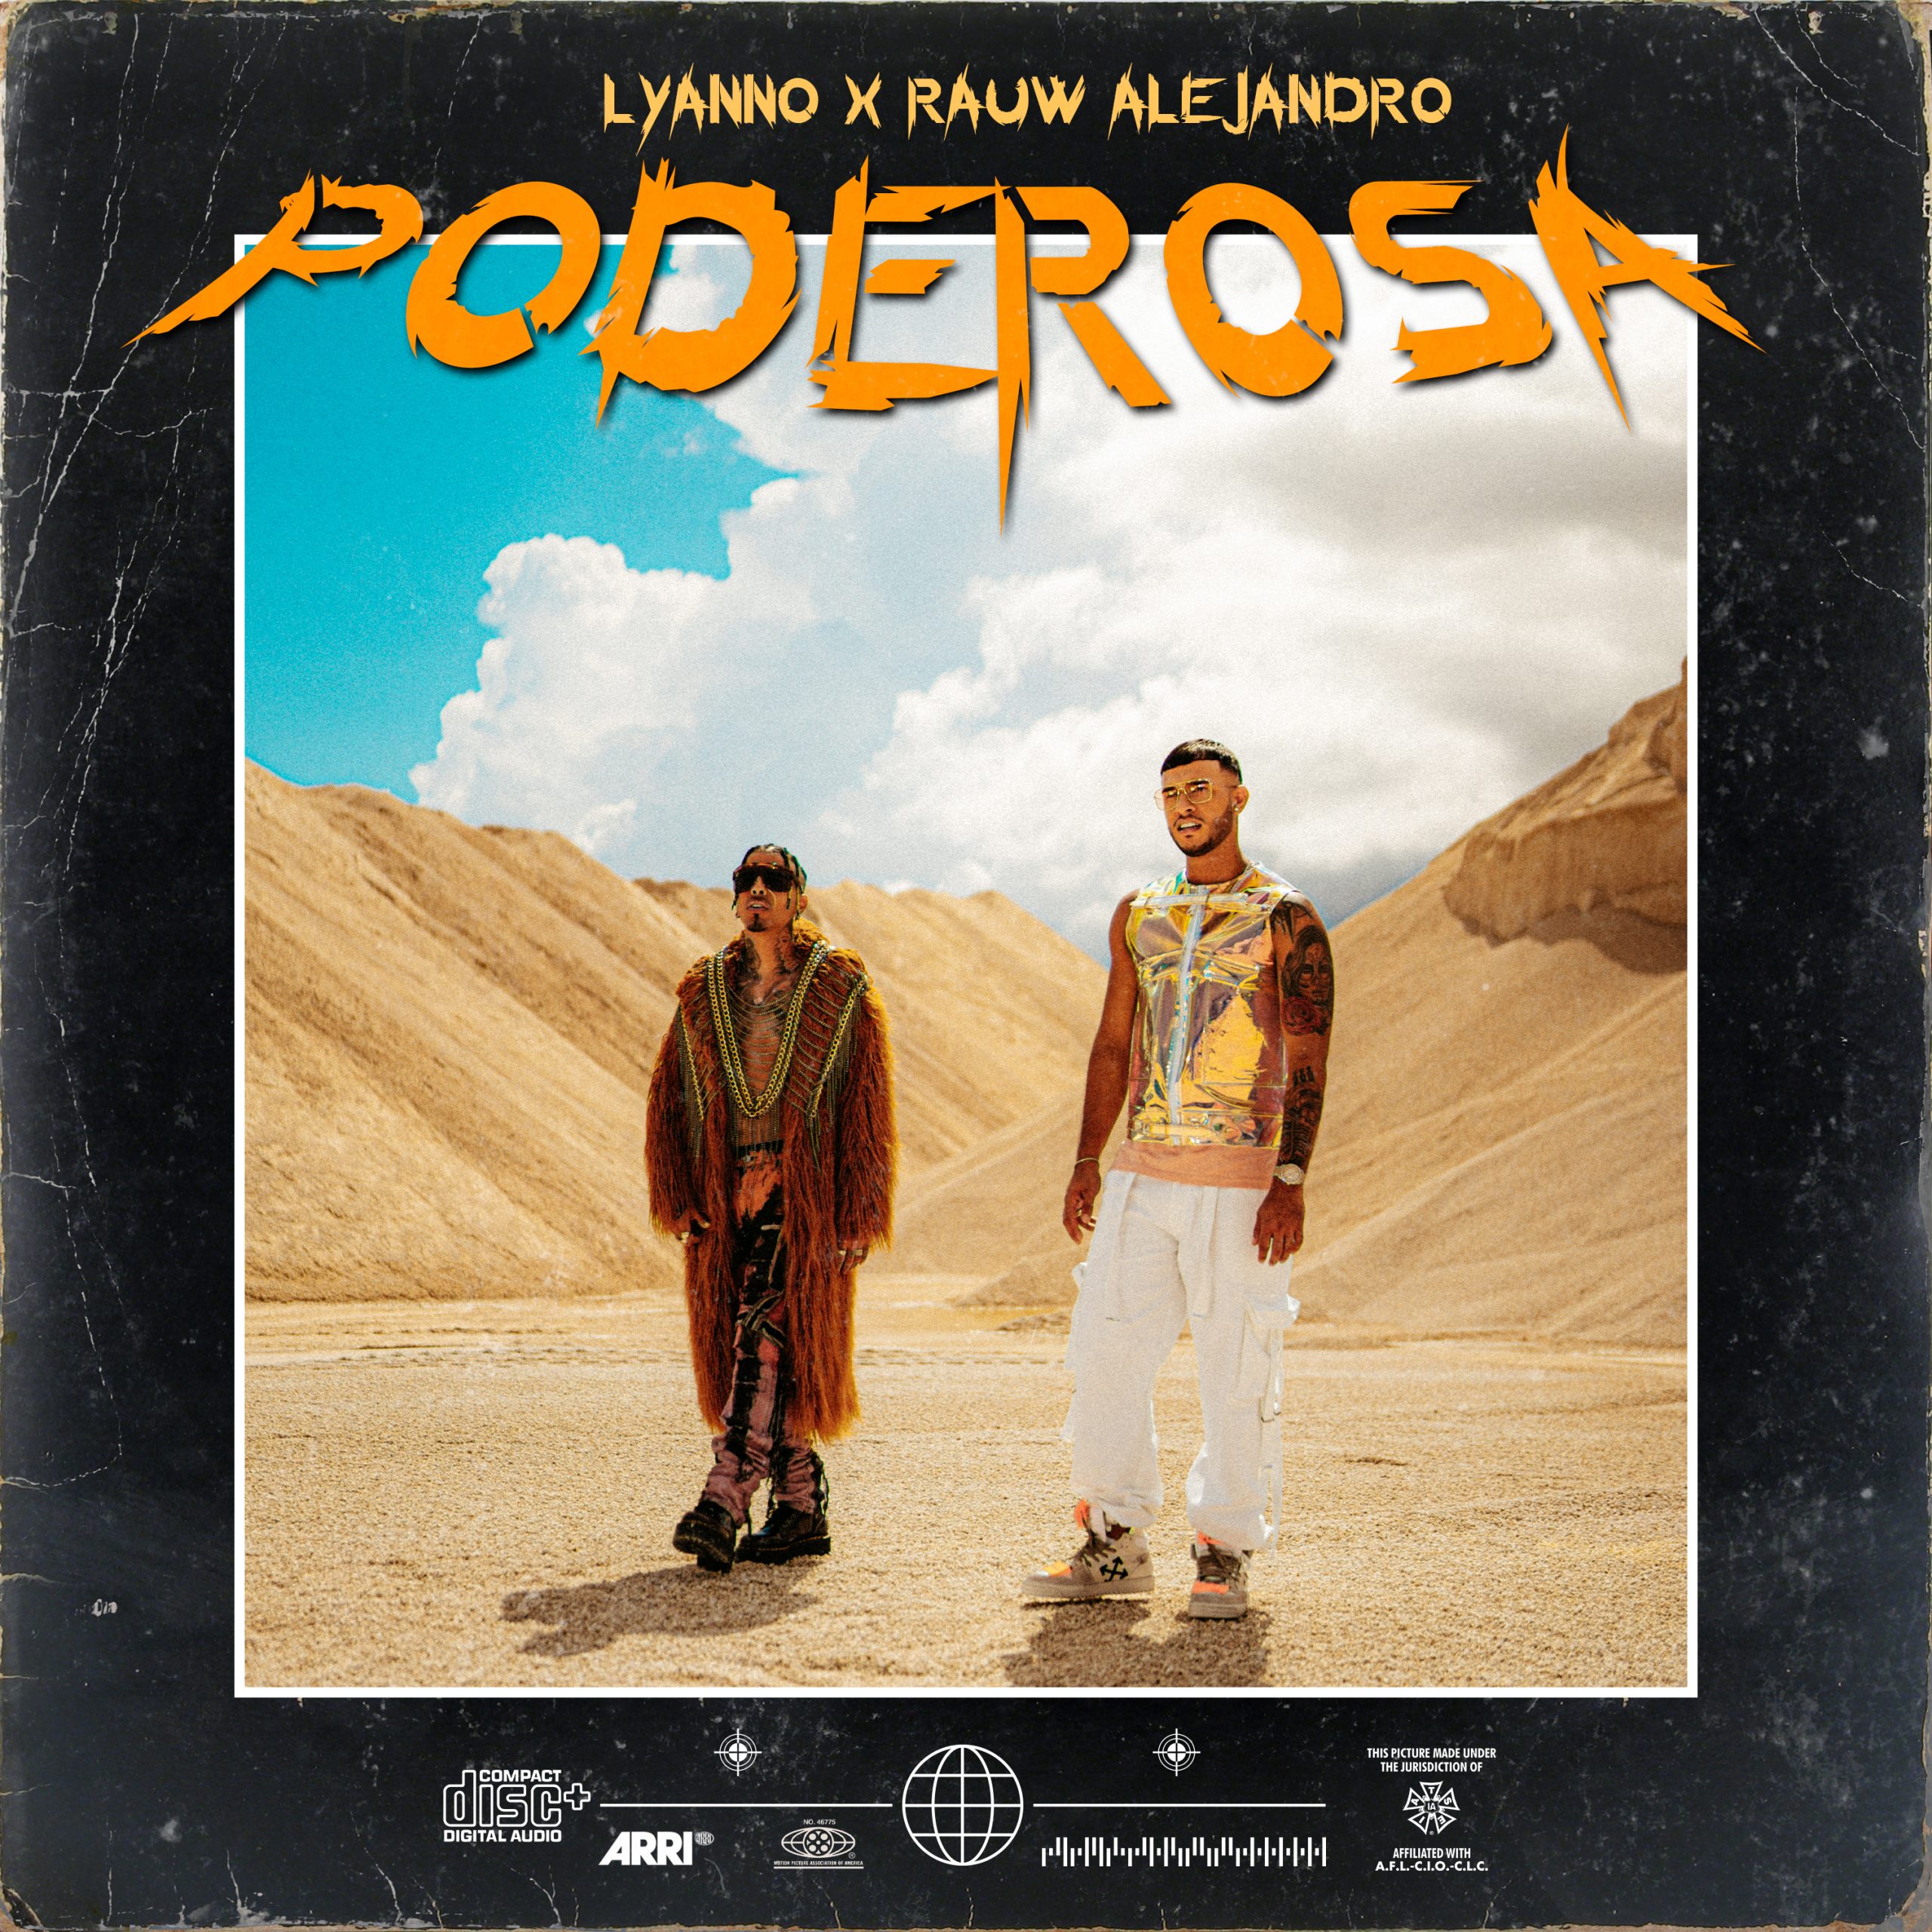 Lyanno lanzó “Poderosa” en colaboración con Rauw Alejandro